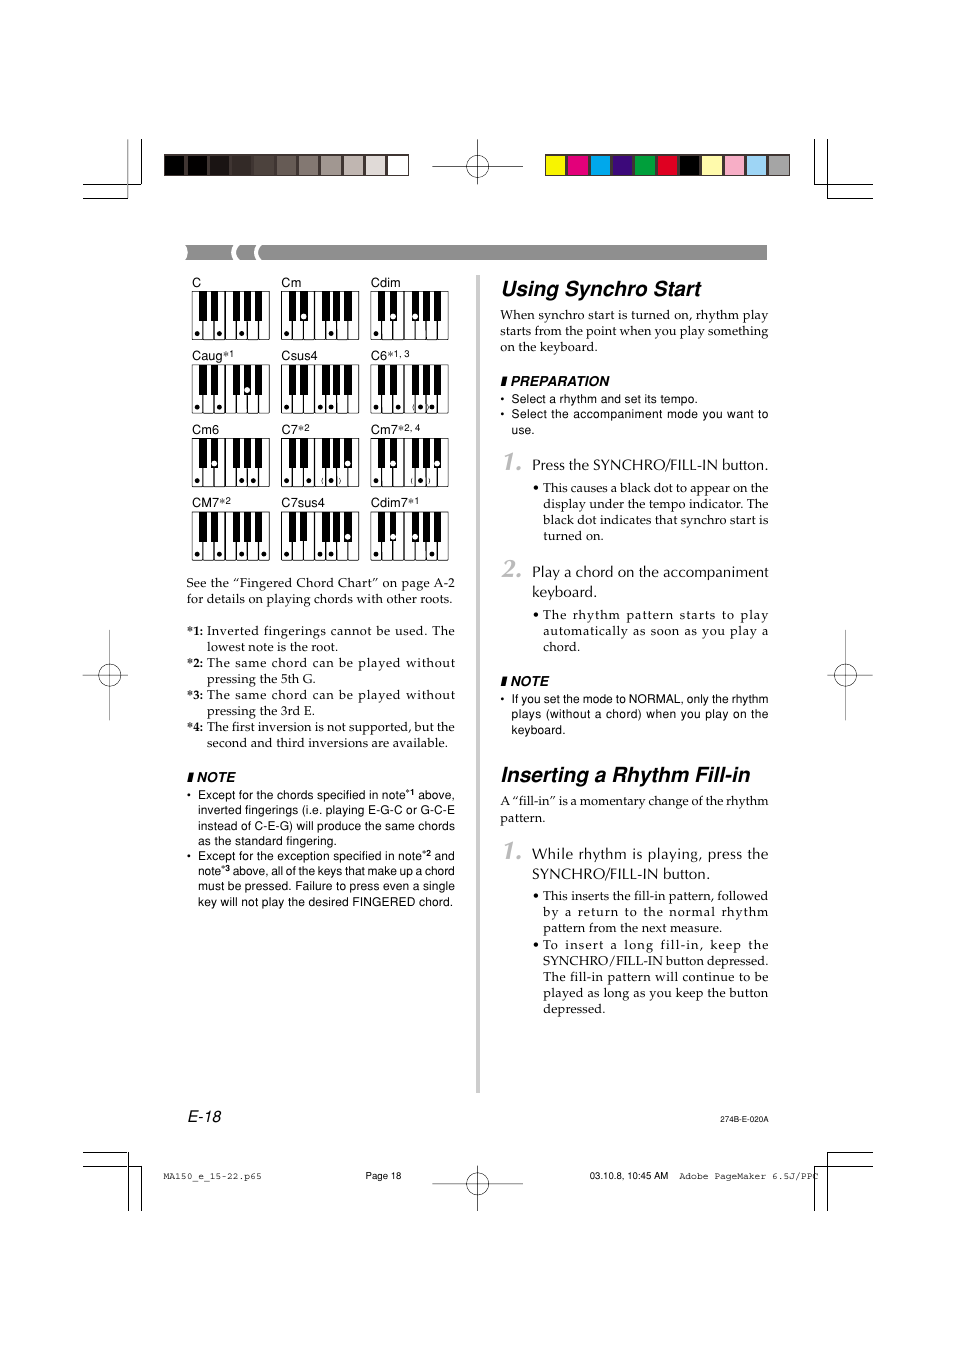 Using synchro start, Inserting a rhythm fill-in, E-18 | Casio MA-150 User  Manual | Page 20 / 43 | Original mode